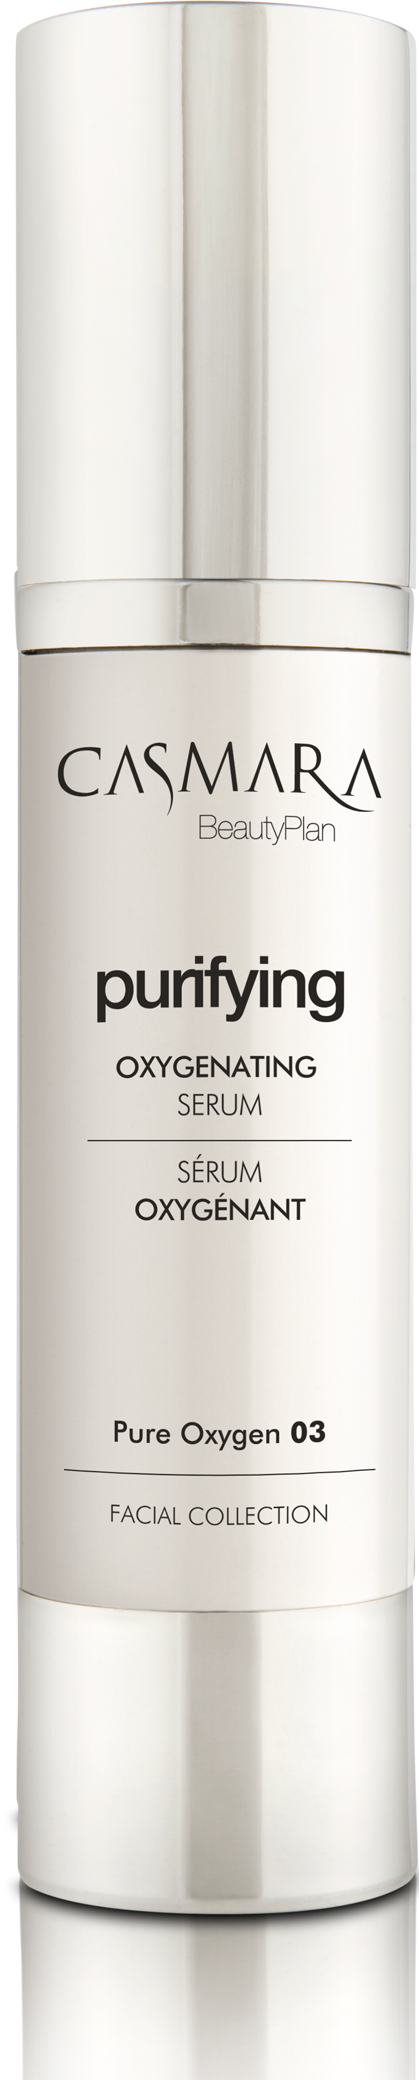 Oxygenating Serum